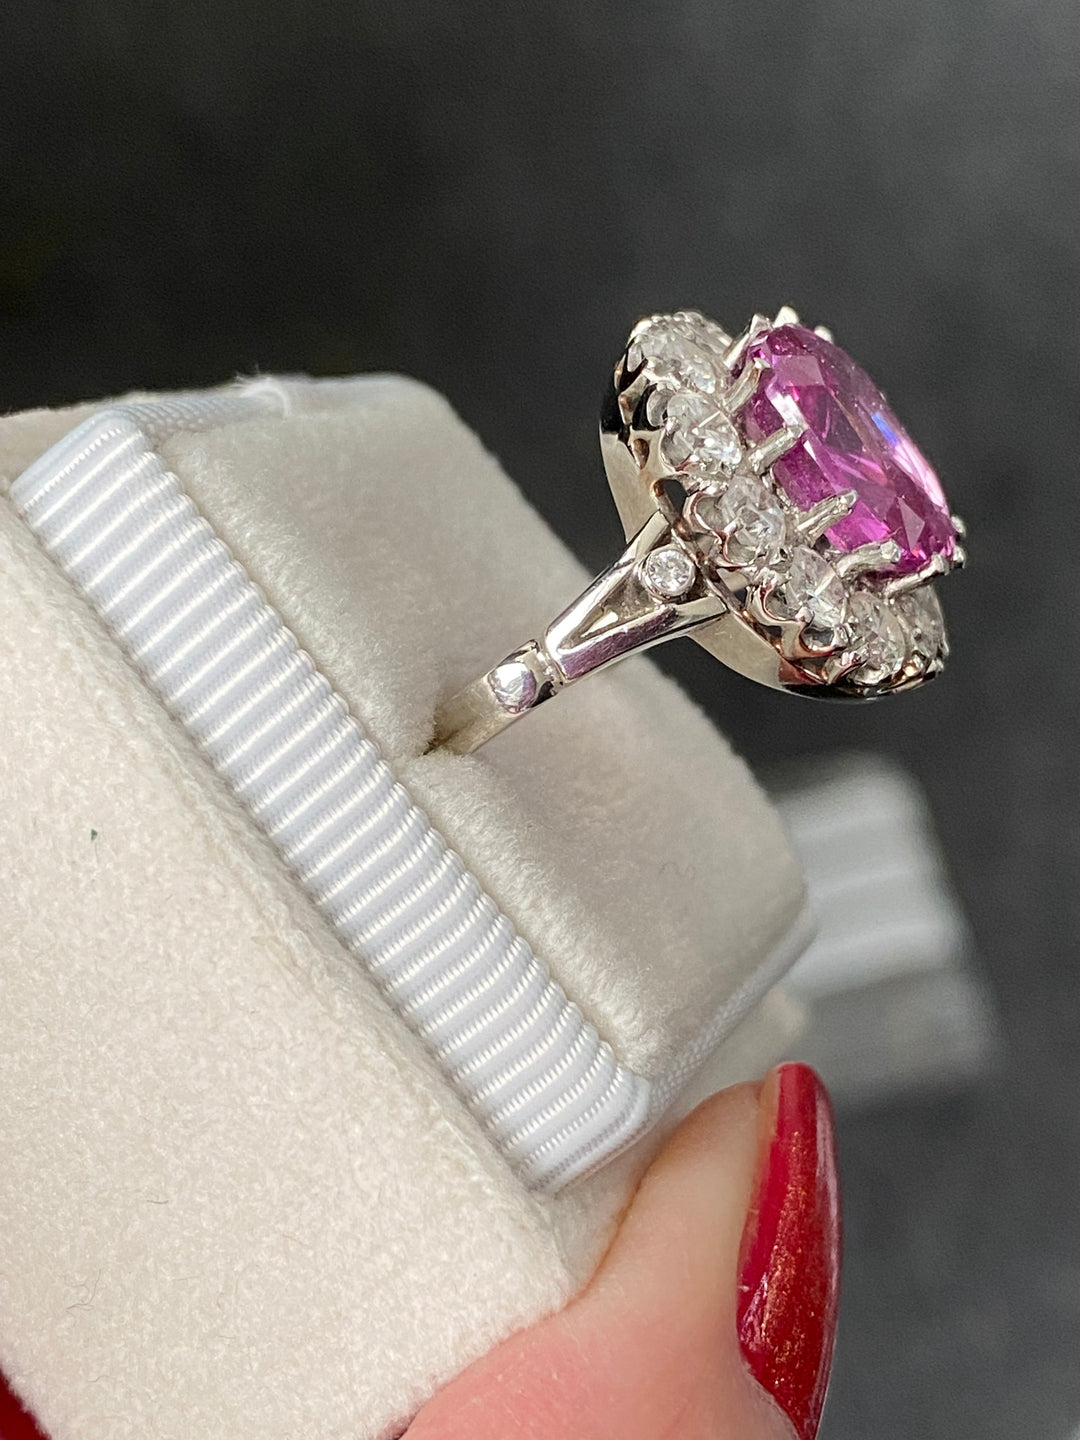 5.51 Carat Cushion Cut Pink Sapphire and 2.10ctw Diamond Halo Ring in Platinum